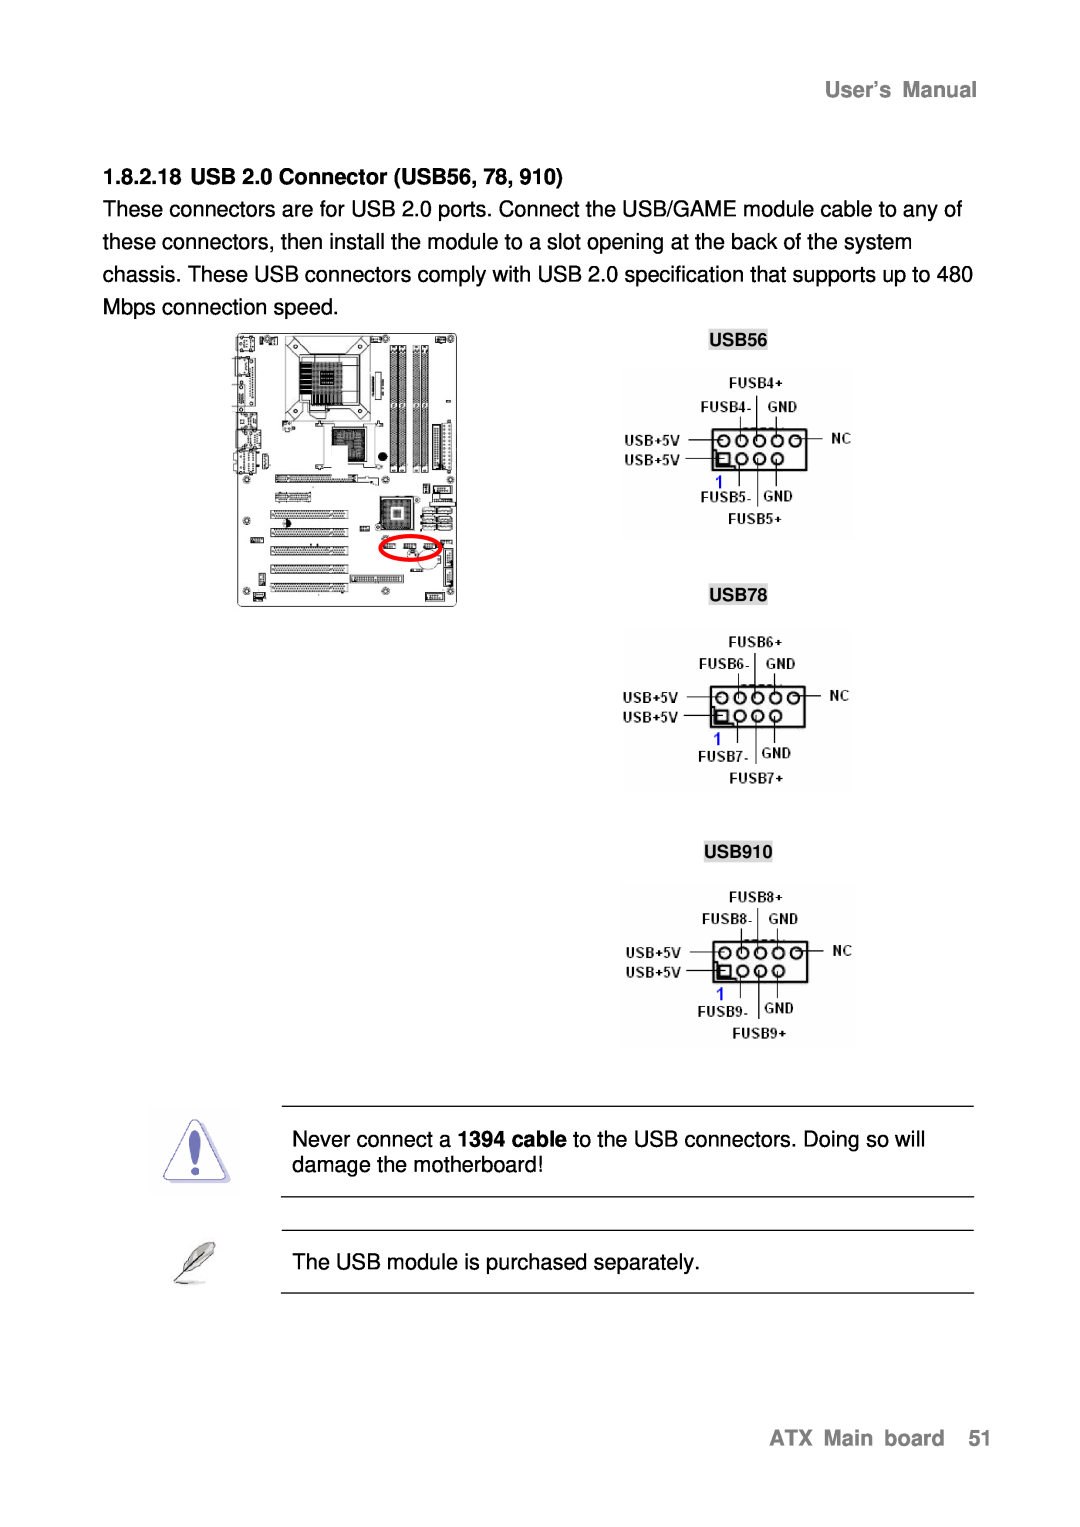 Intel AX965Q user manual USB 2.0 Connector USB56, 78, User’s Manual, ATX Main board 